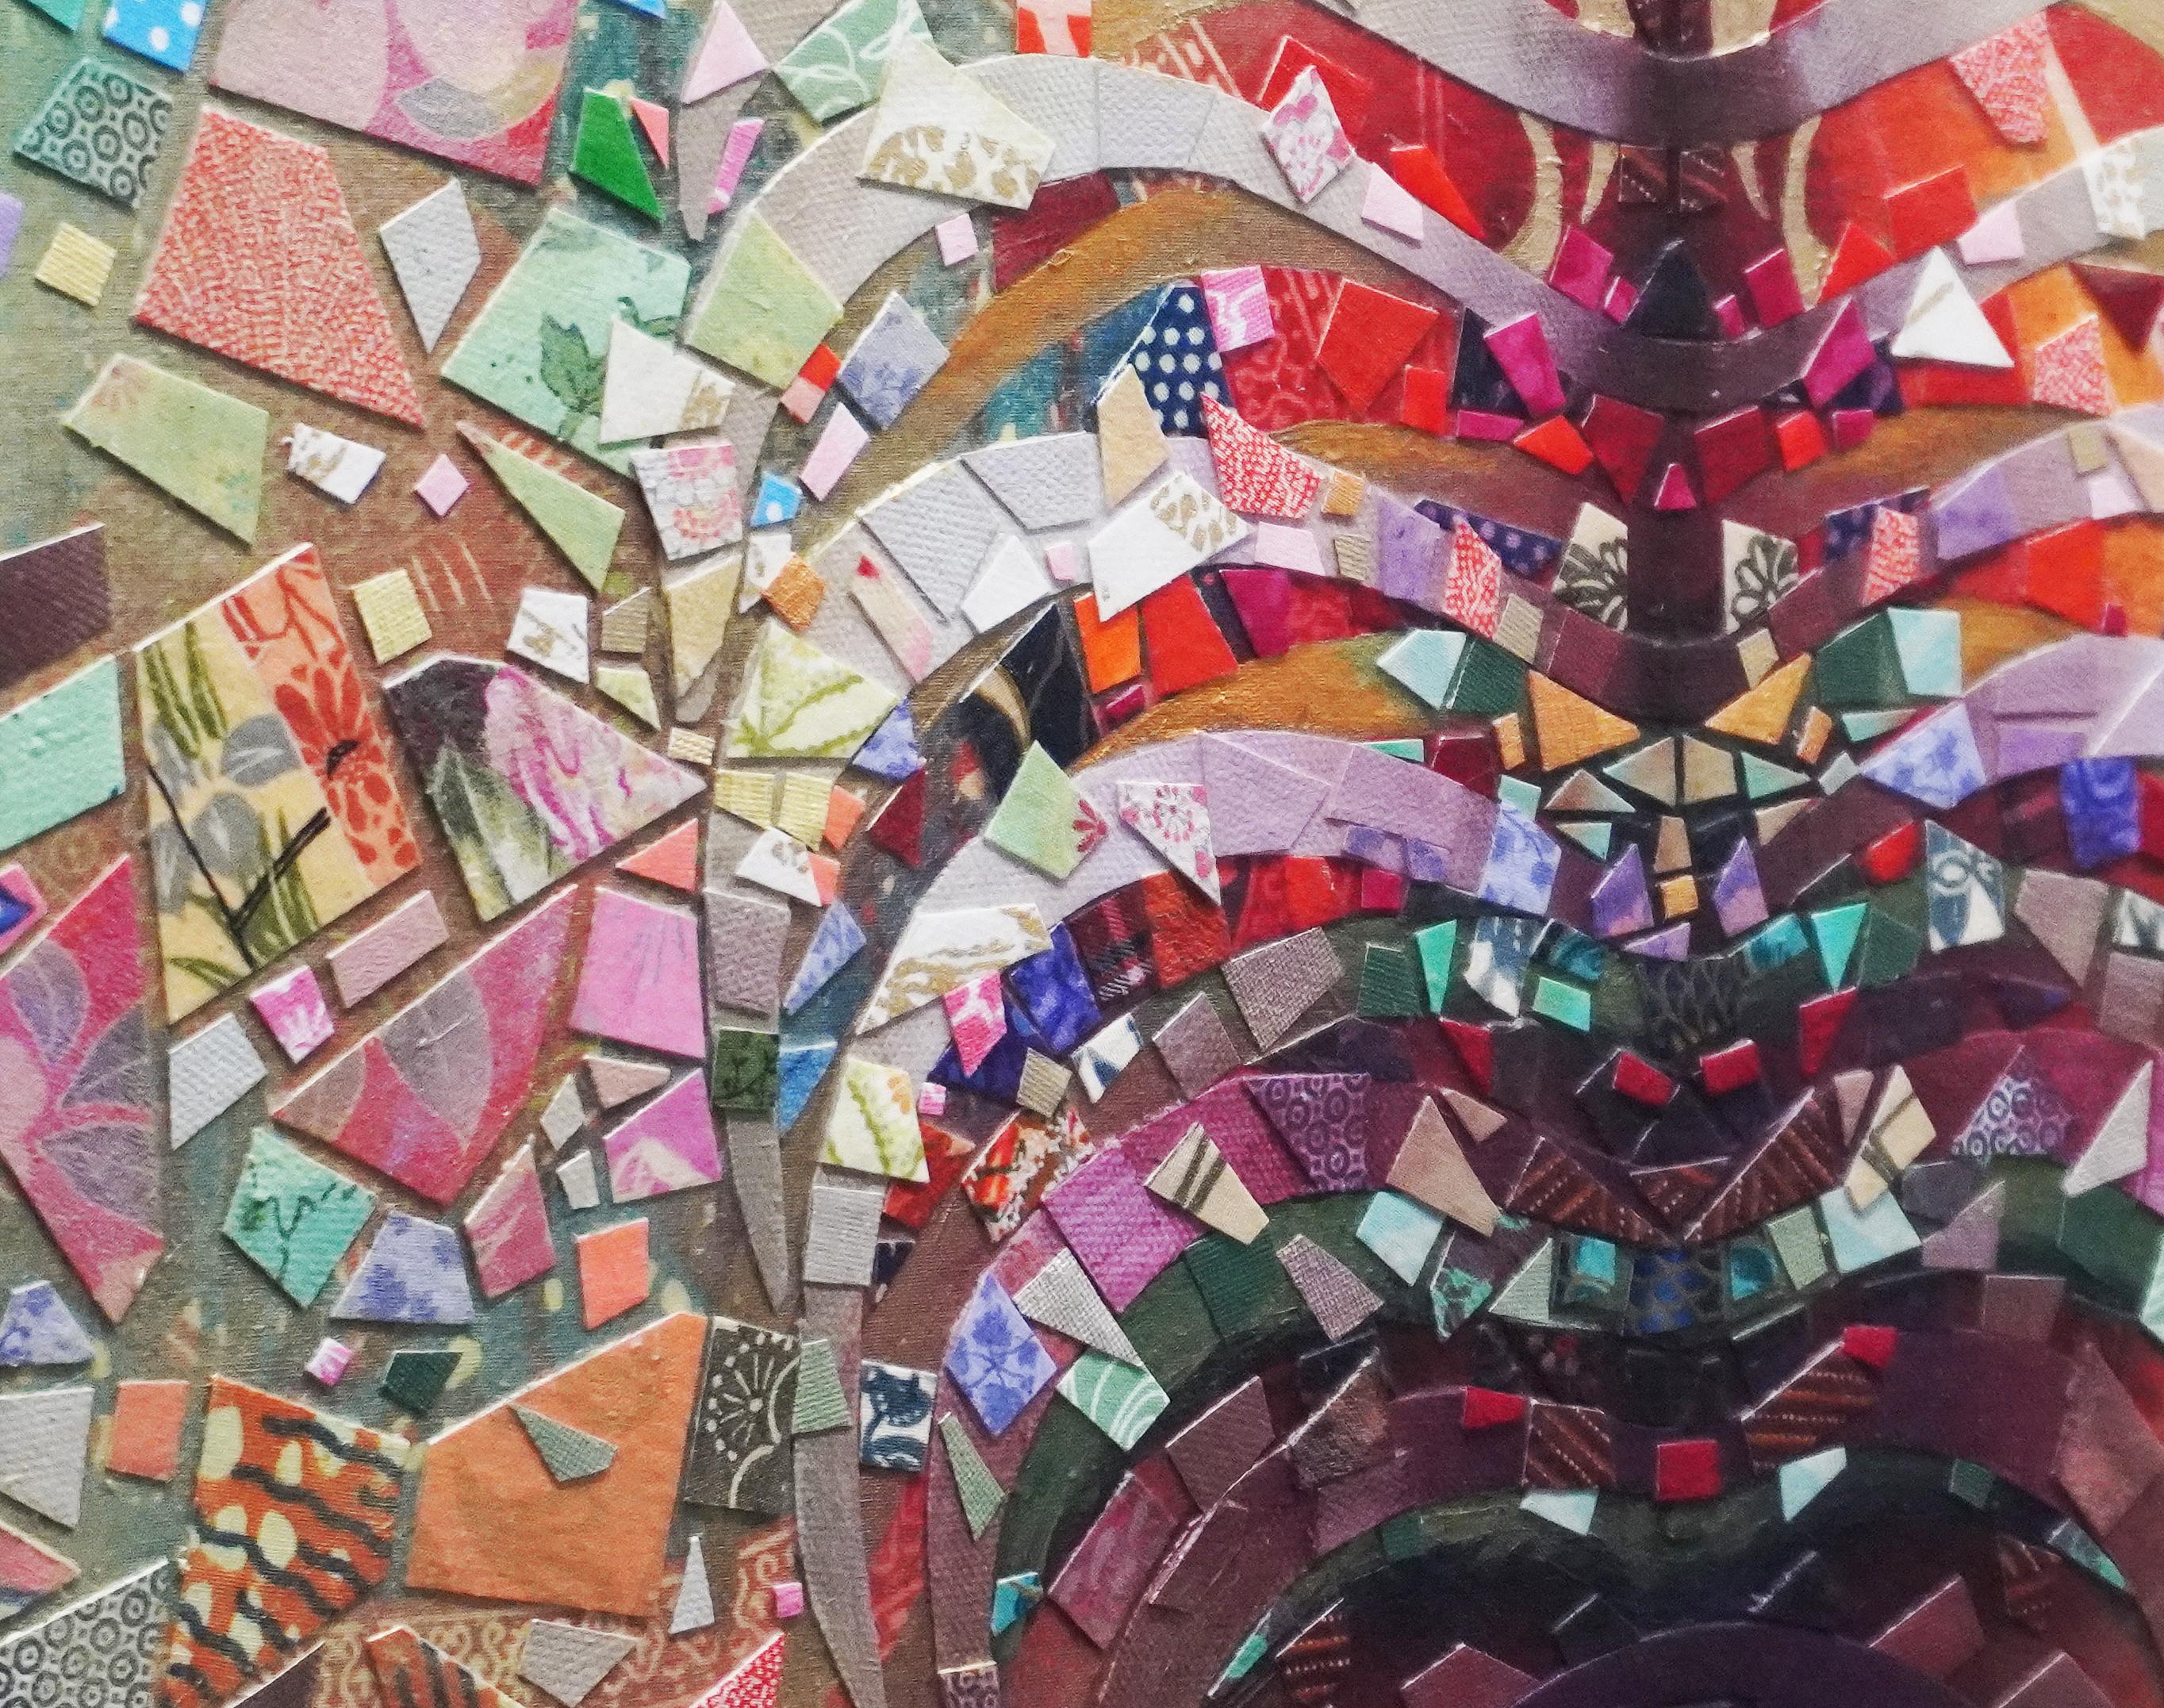 Soul Guardian : œuvre d'art multimédia - Contemporain Mixed Media Art par Tomo Mori